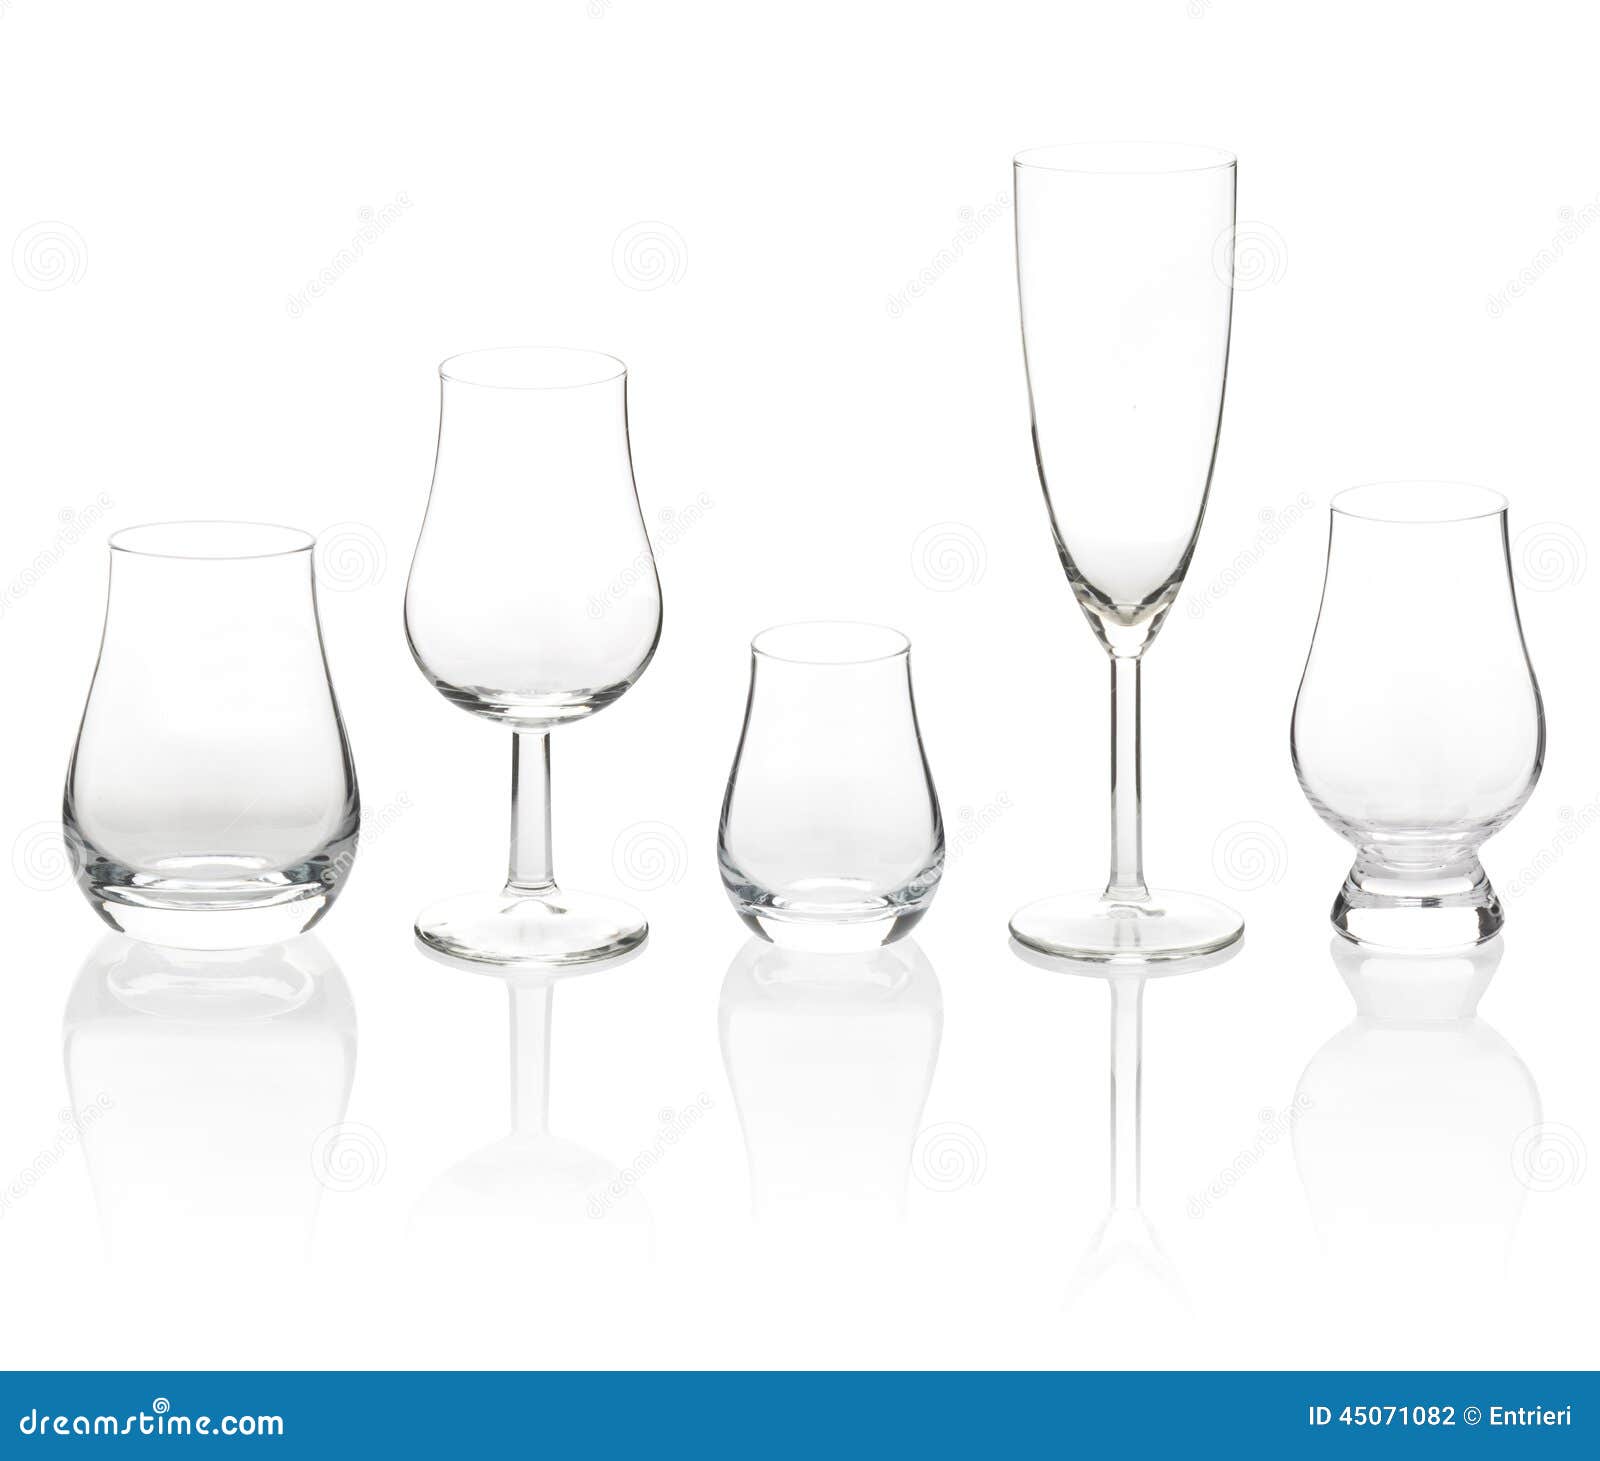 Realistic glassware kitchen utensils transparent Vector Image